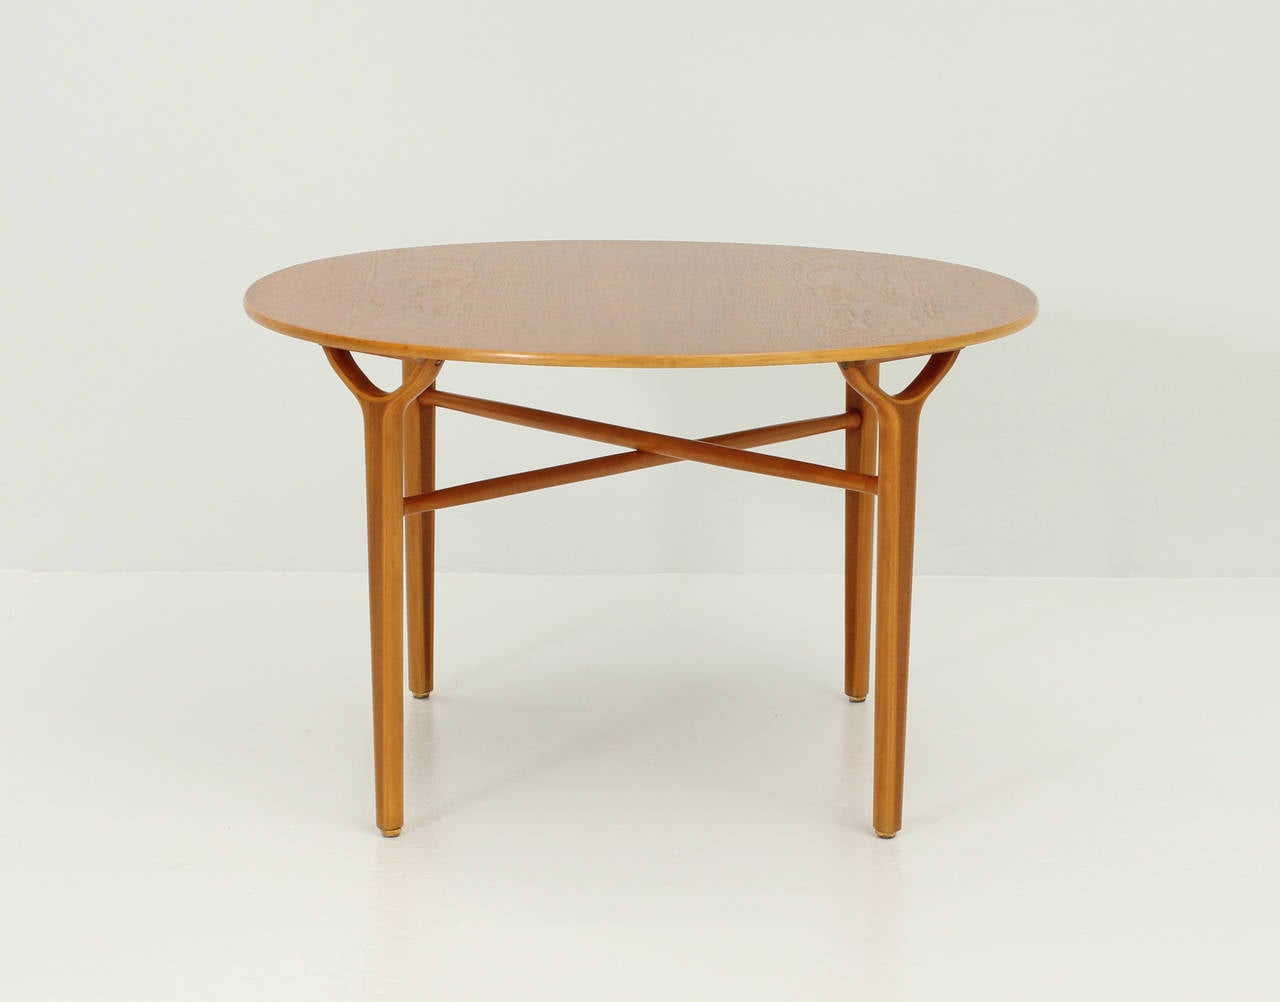 Ax table designed by danish designers Peter Hvidt and Orla Mølgaard-Nielsen in 1950 for Fritz Hansen, Denmark. Beech and teak wood.